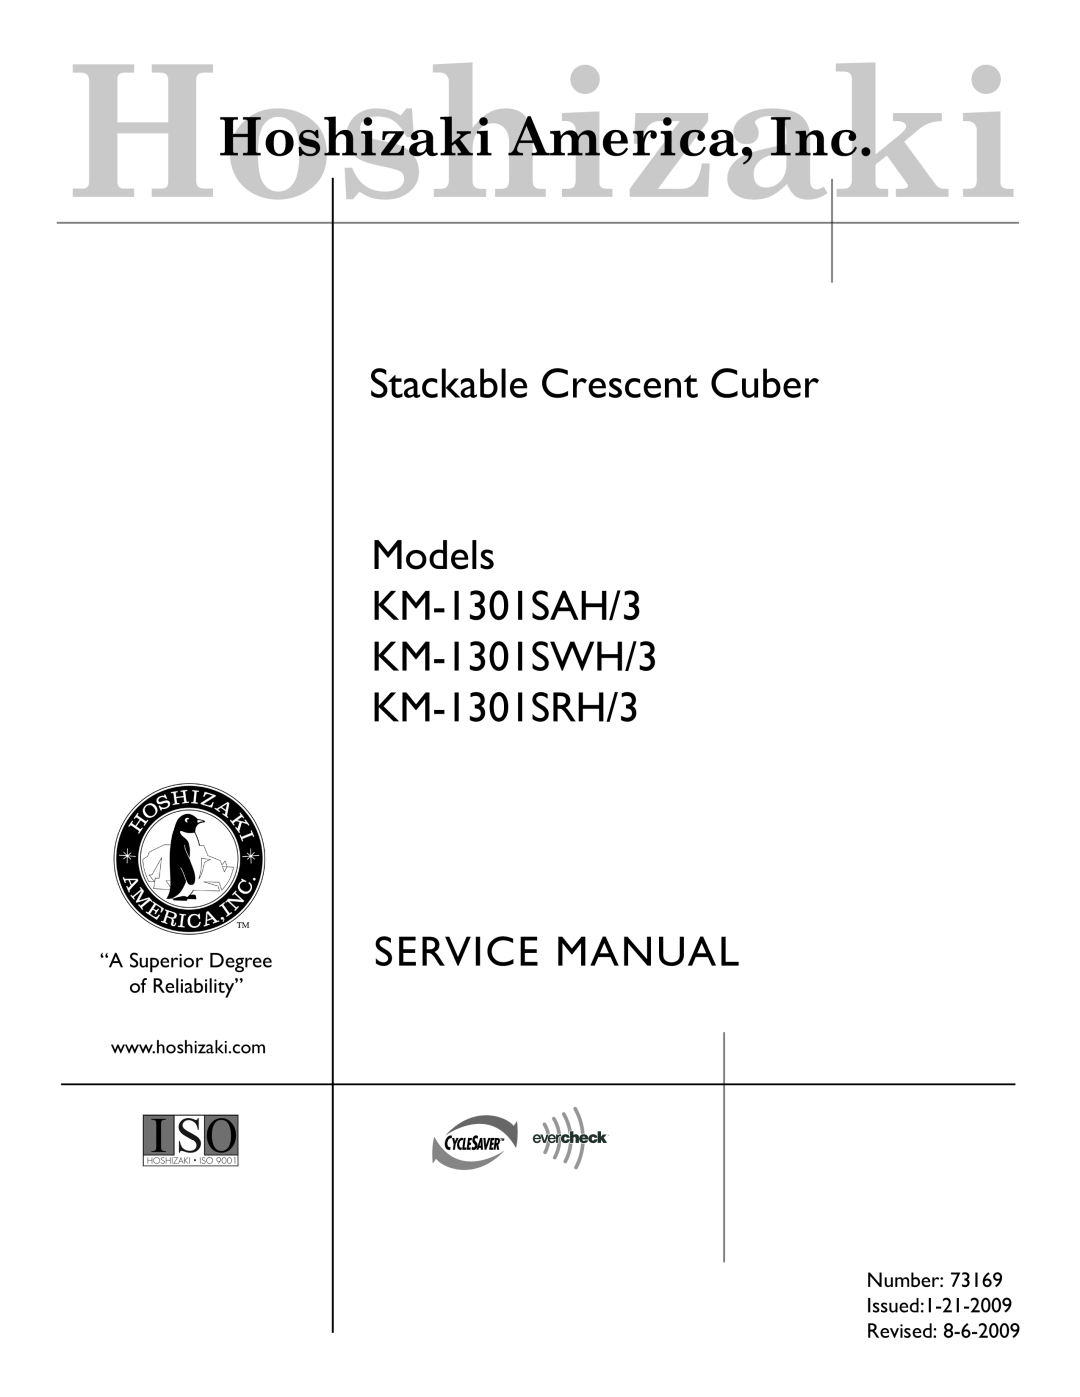 Hoshizaki KM-1301SRH/3 service manual Stackable Crescent Cuber Models KM-1301SAH/3, HoshizakiHoshizaki America, Inc 